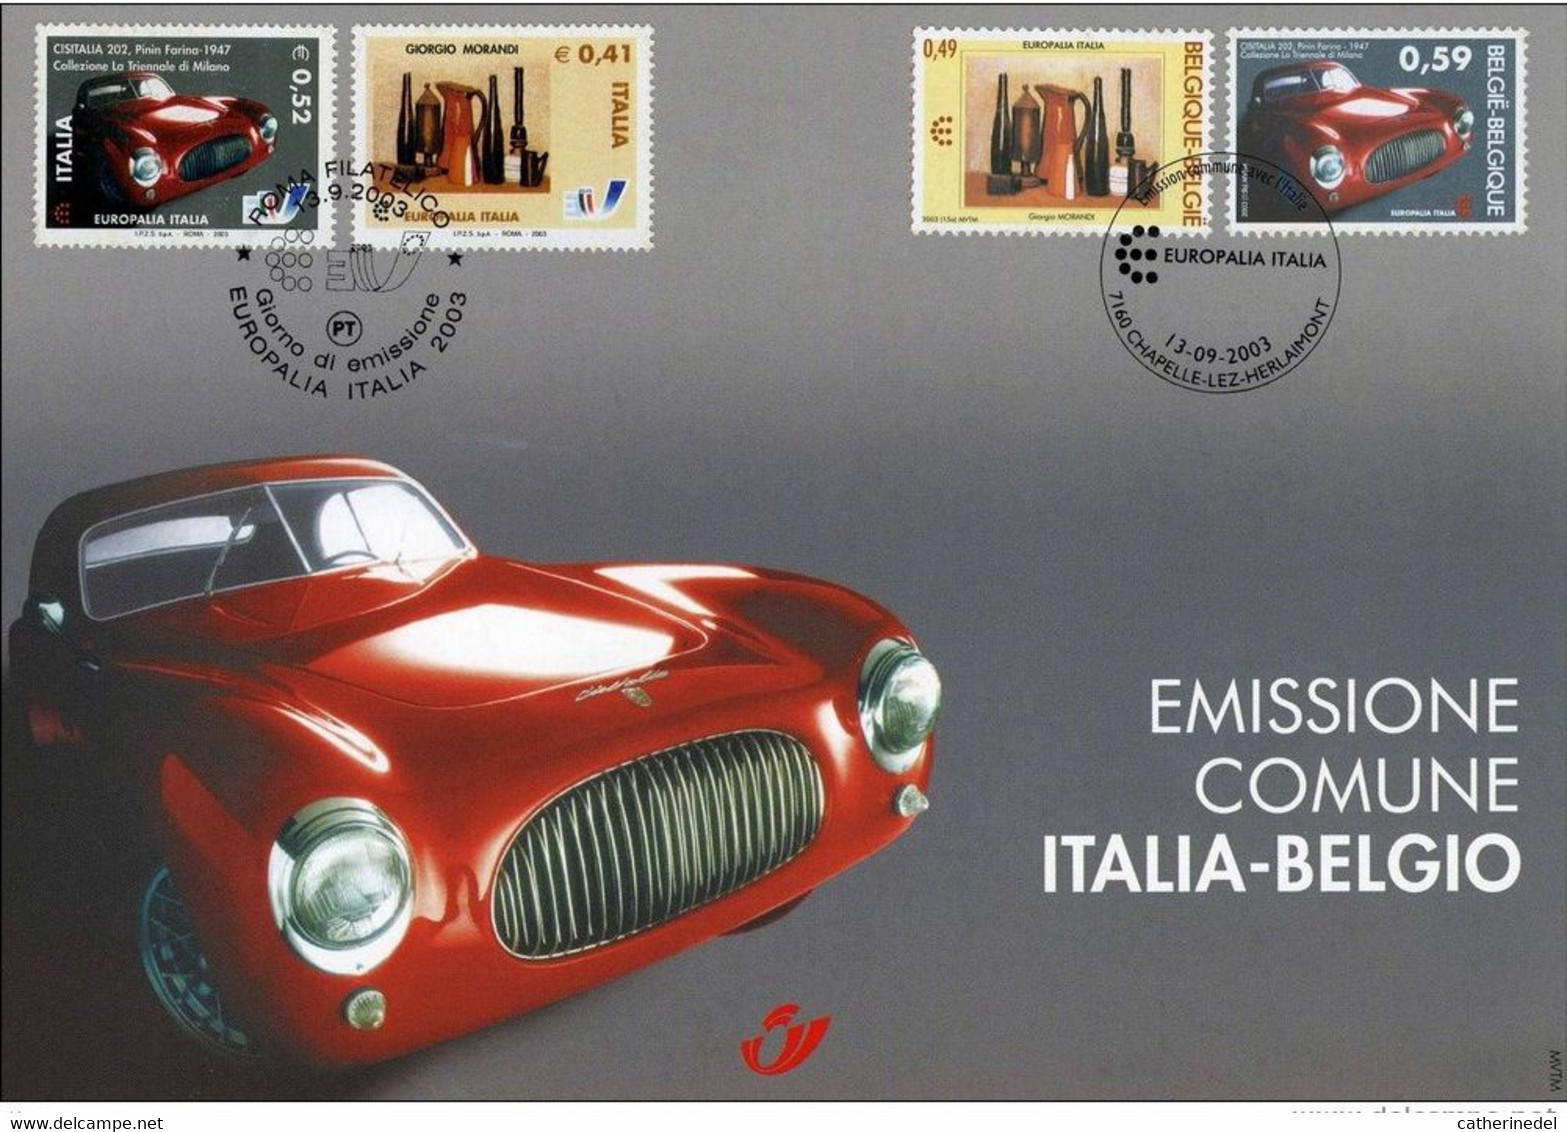 Année 2003 : Carte Souvenir 3205HK - Europalia Italie - Cartas Commemorativas - Emisiones Comunes [HK]